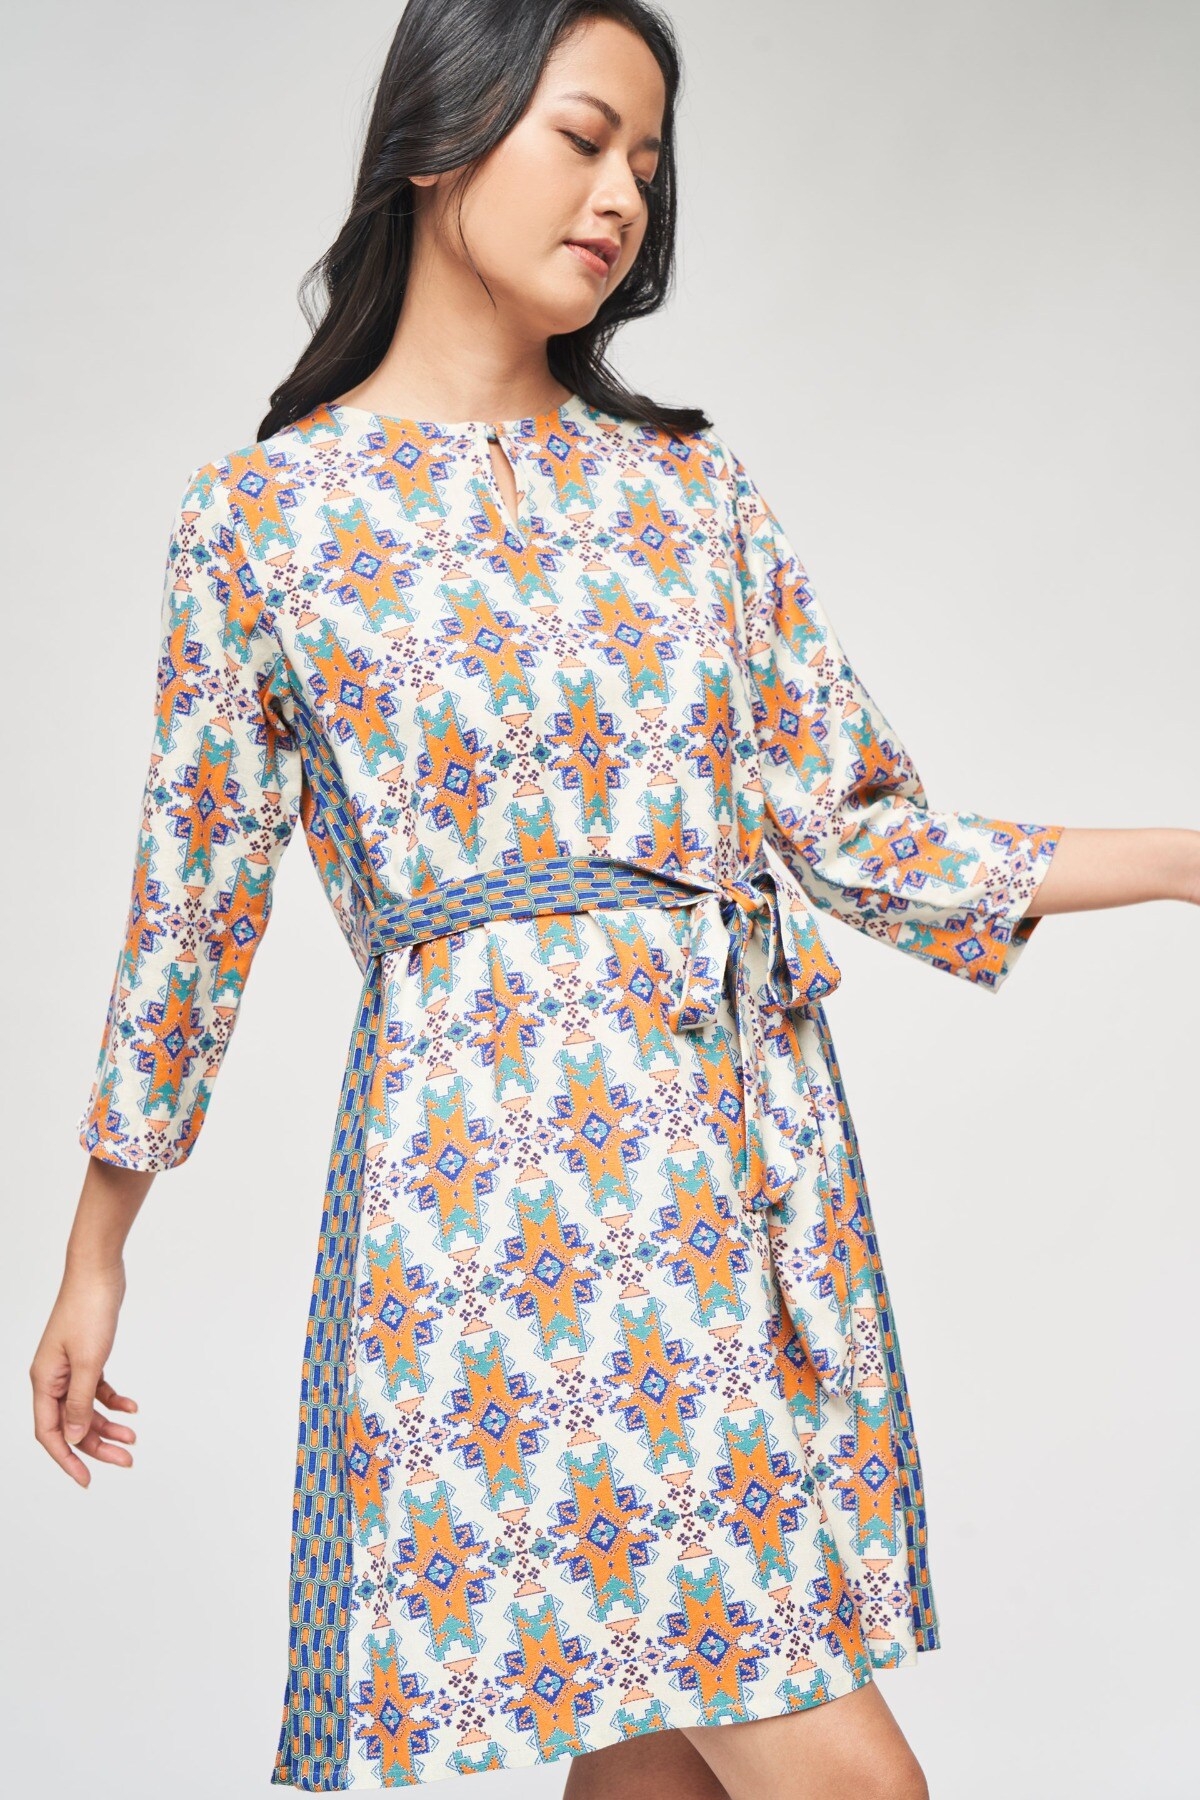 Global Desi | Off White Geometric Printed A-Line Dress 3